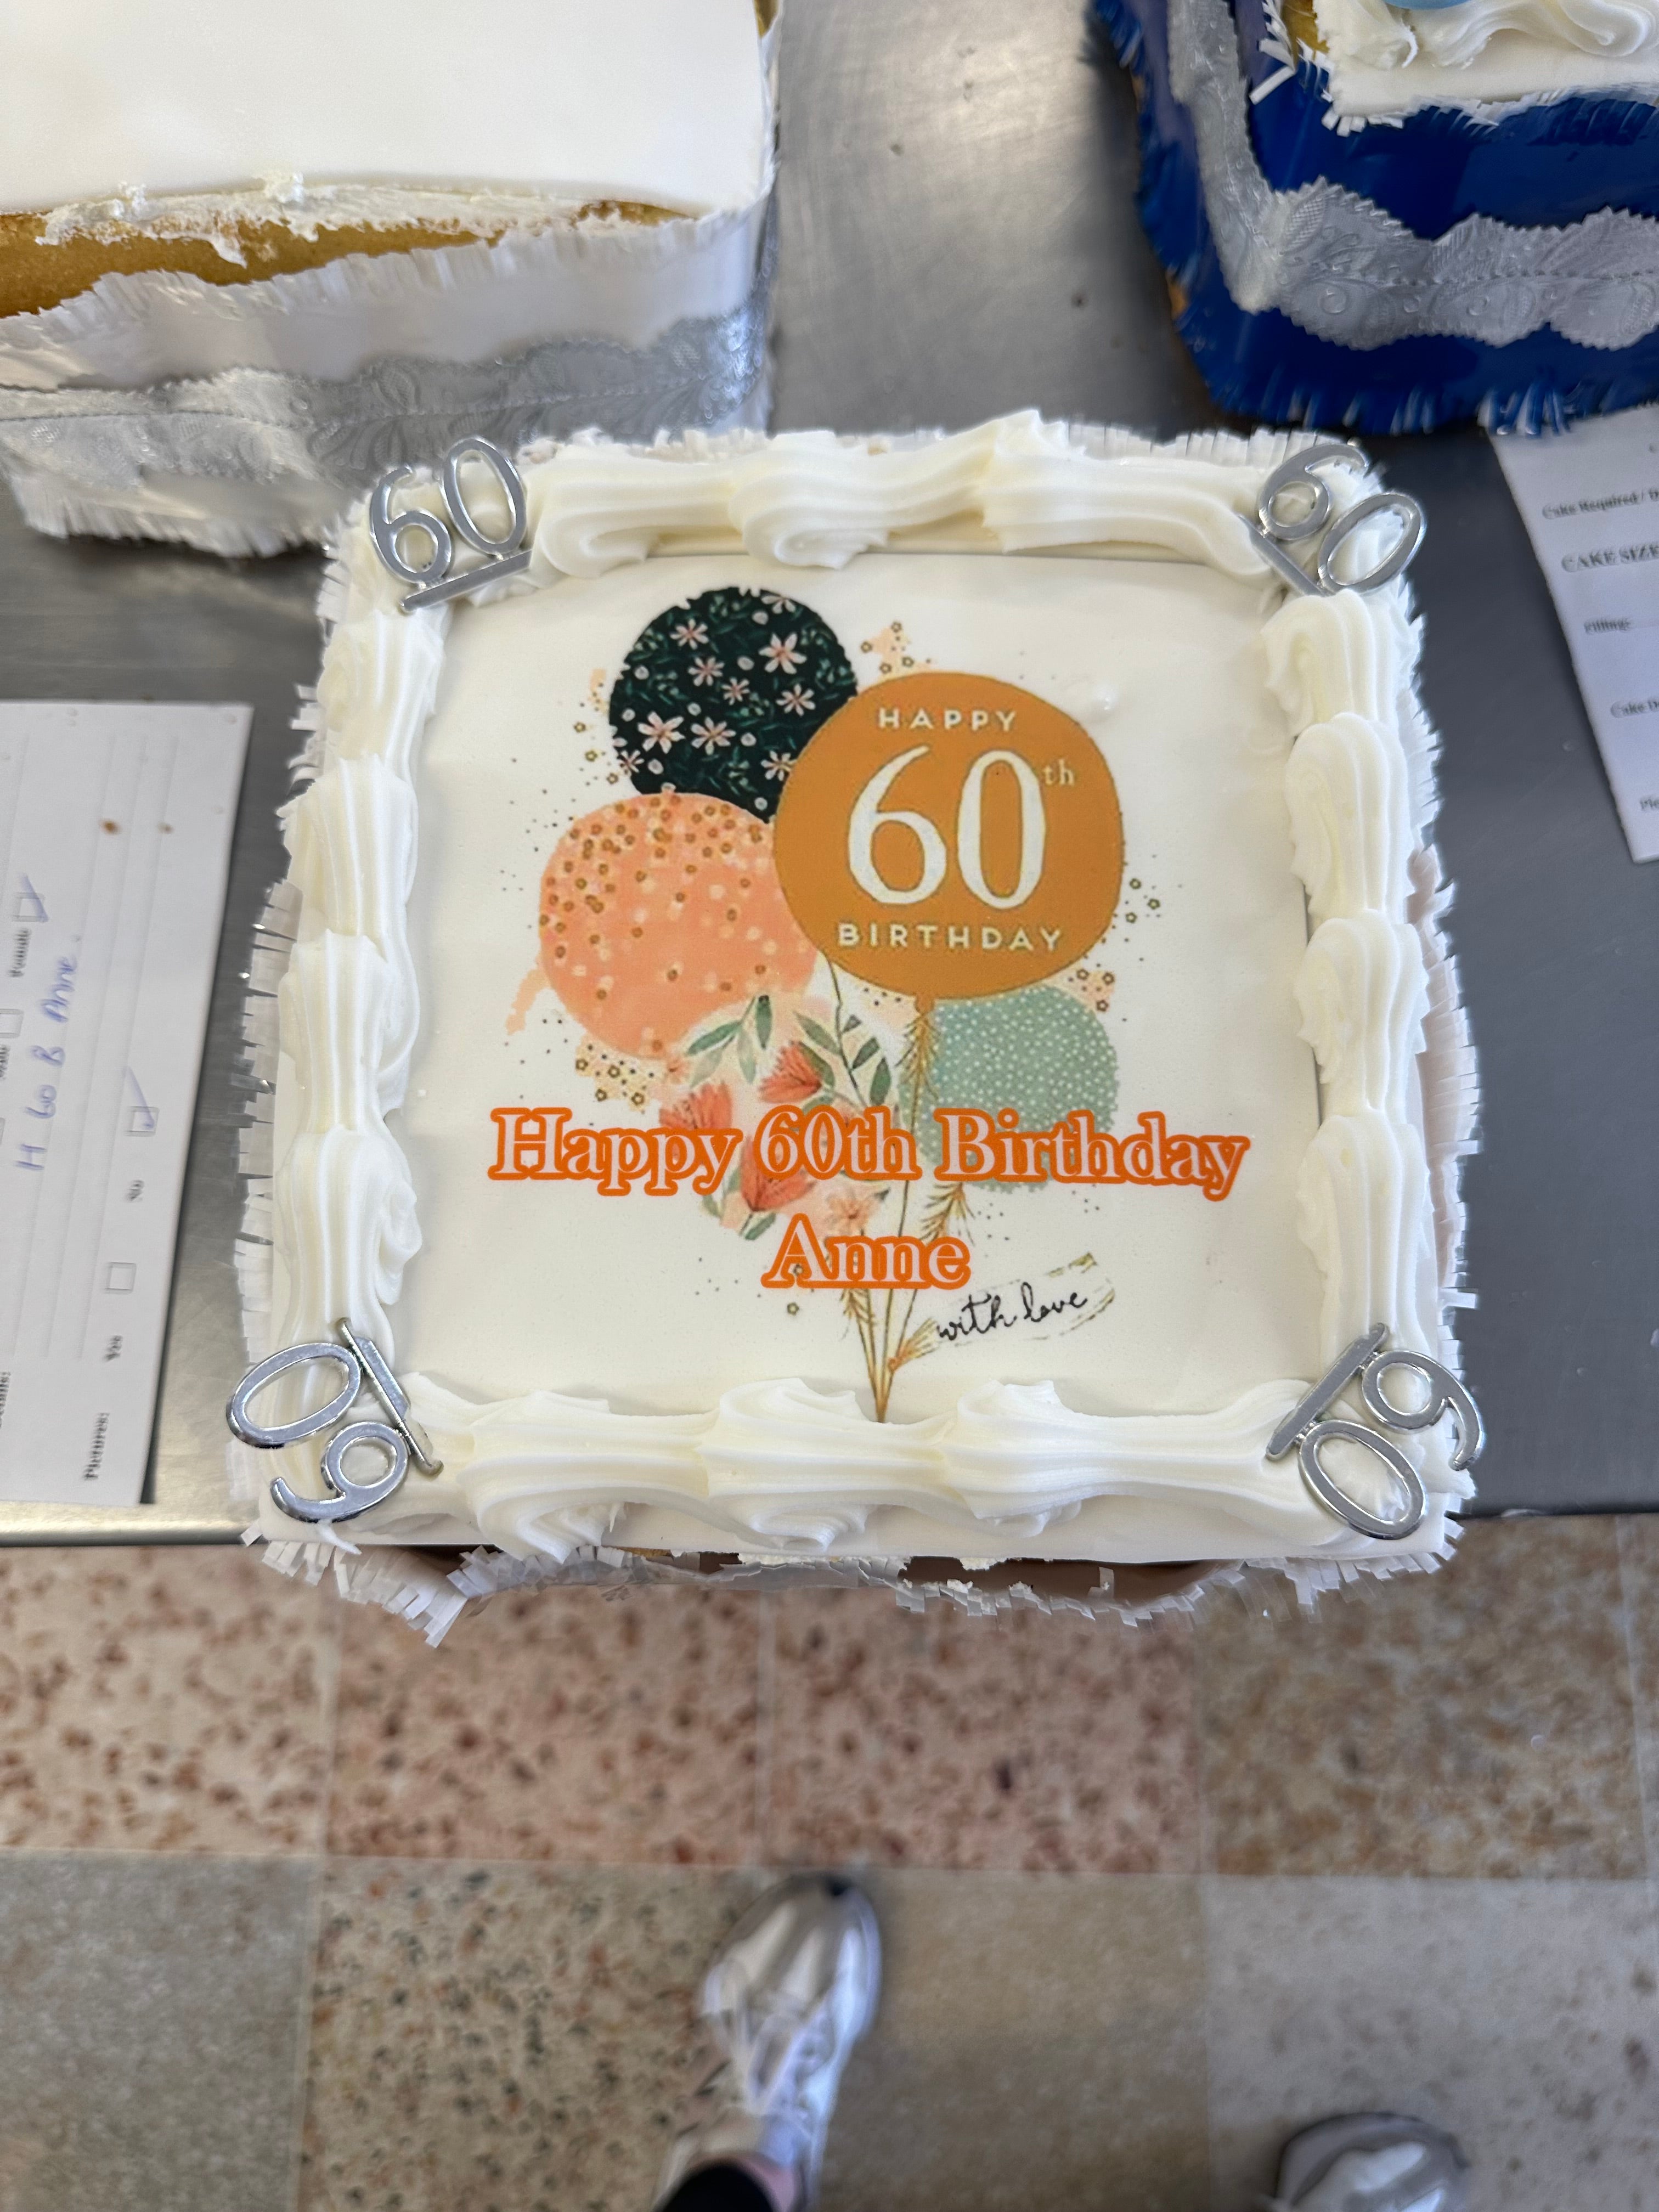 Best Birthday Cakes in Hillsboro, OR - La Imperial Bakery